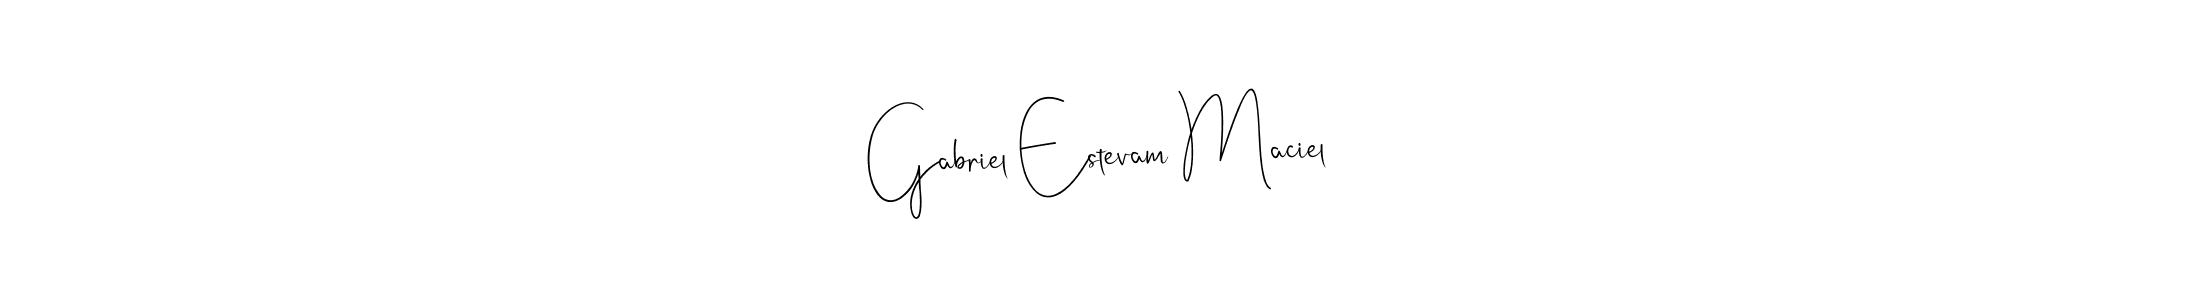 How to Draw Gabriel Estevam Maciel signature style? Andilay-7BmLP is a latest design signature styles for name Gabriel Estevam Maciel. Gabriel Estevam Maciel signature style 4 images and pictures png